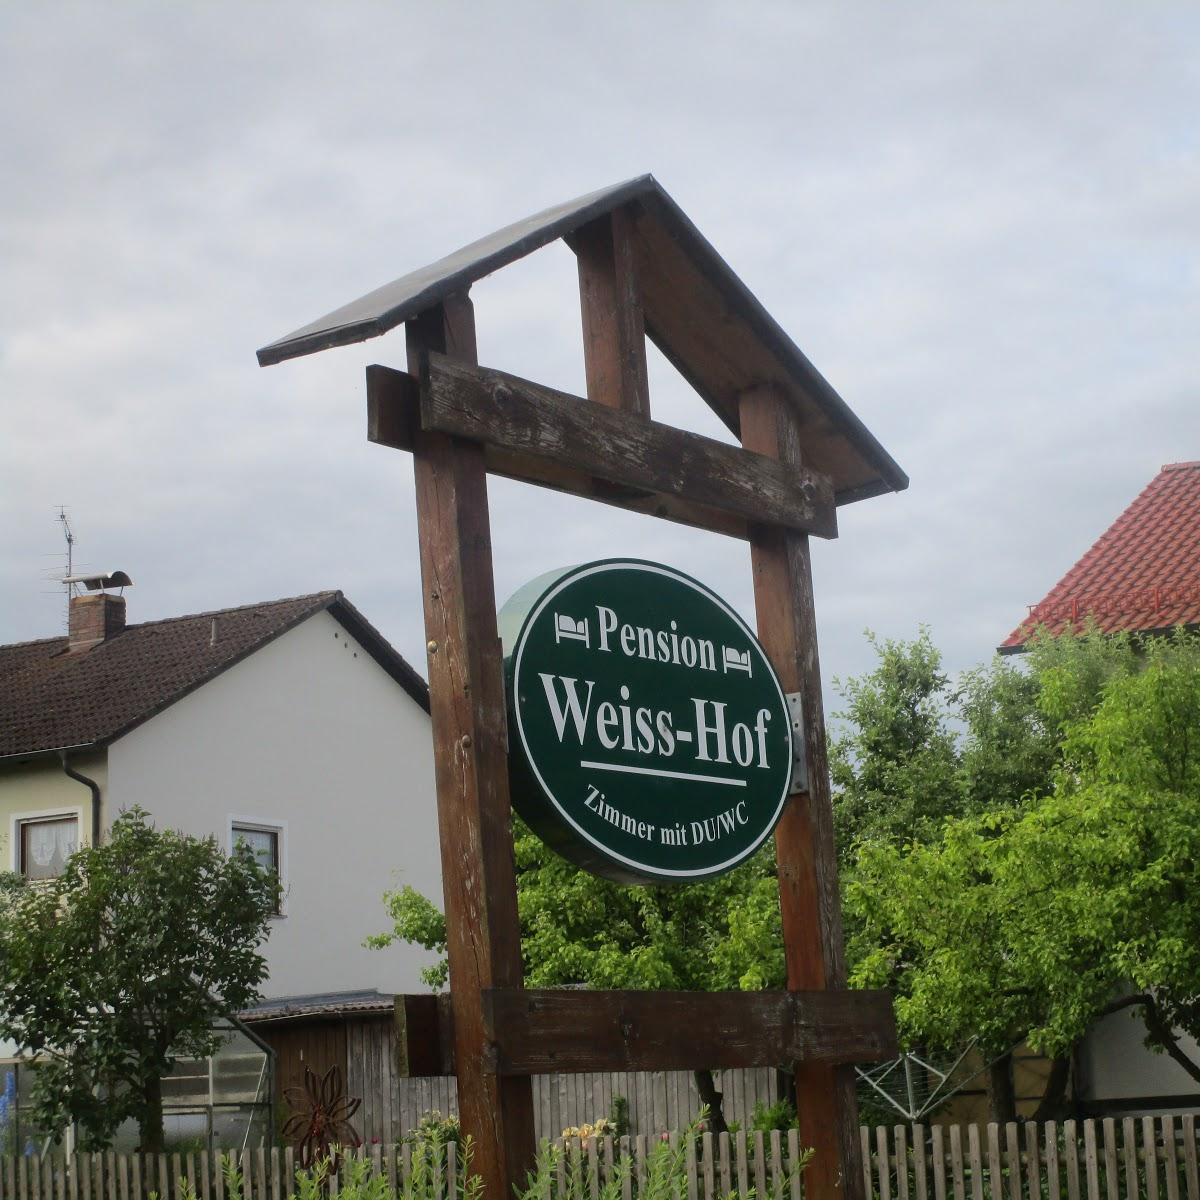 Restaurant "Weiss-Hof" in Kirchroth